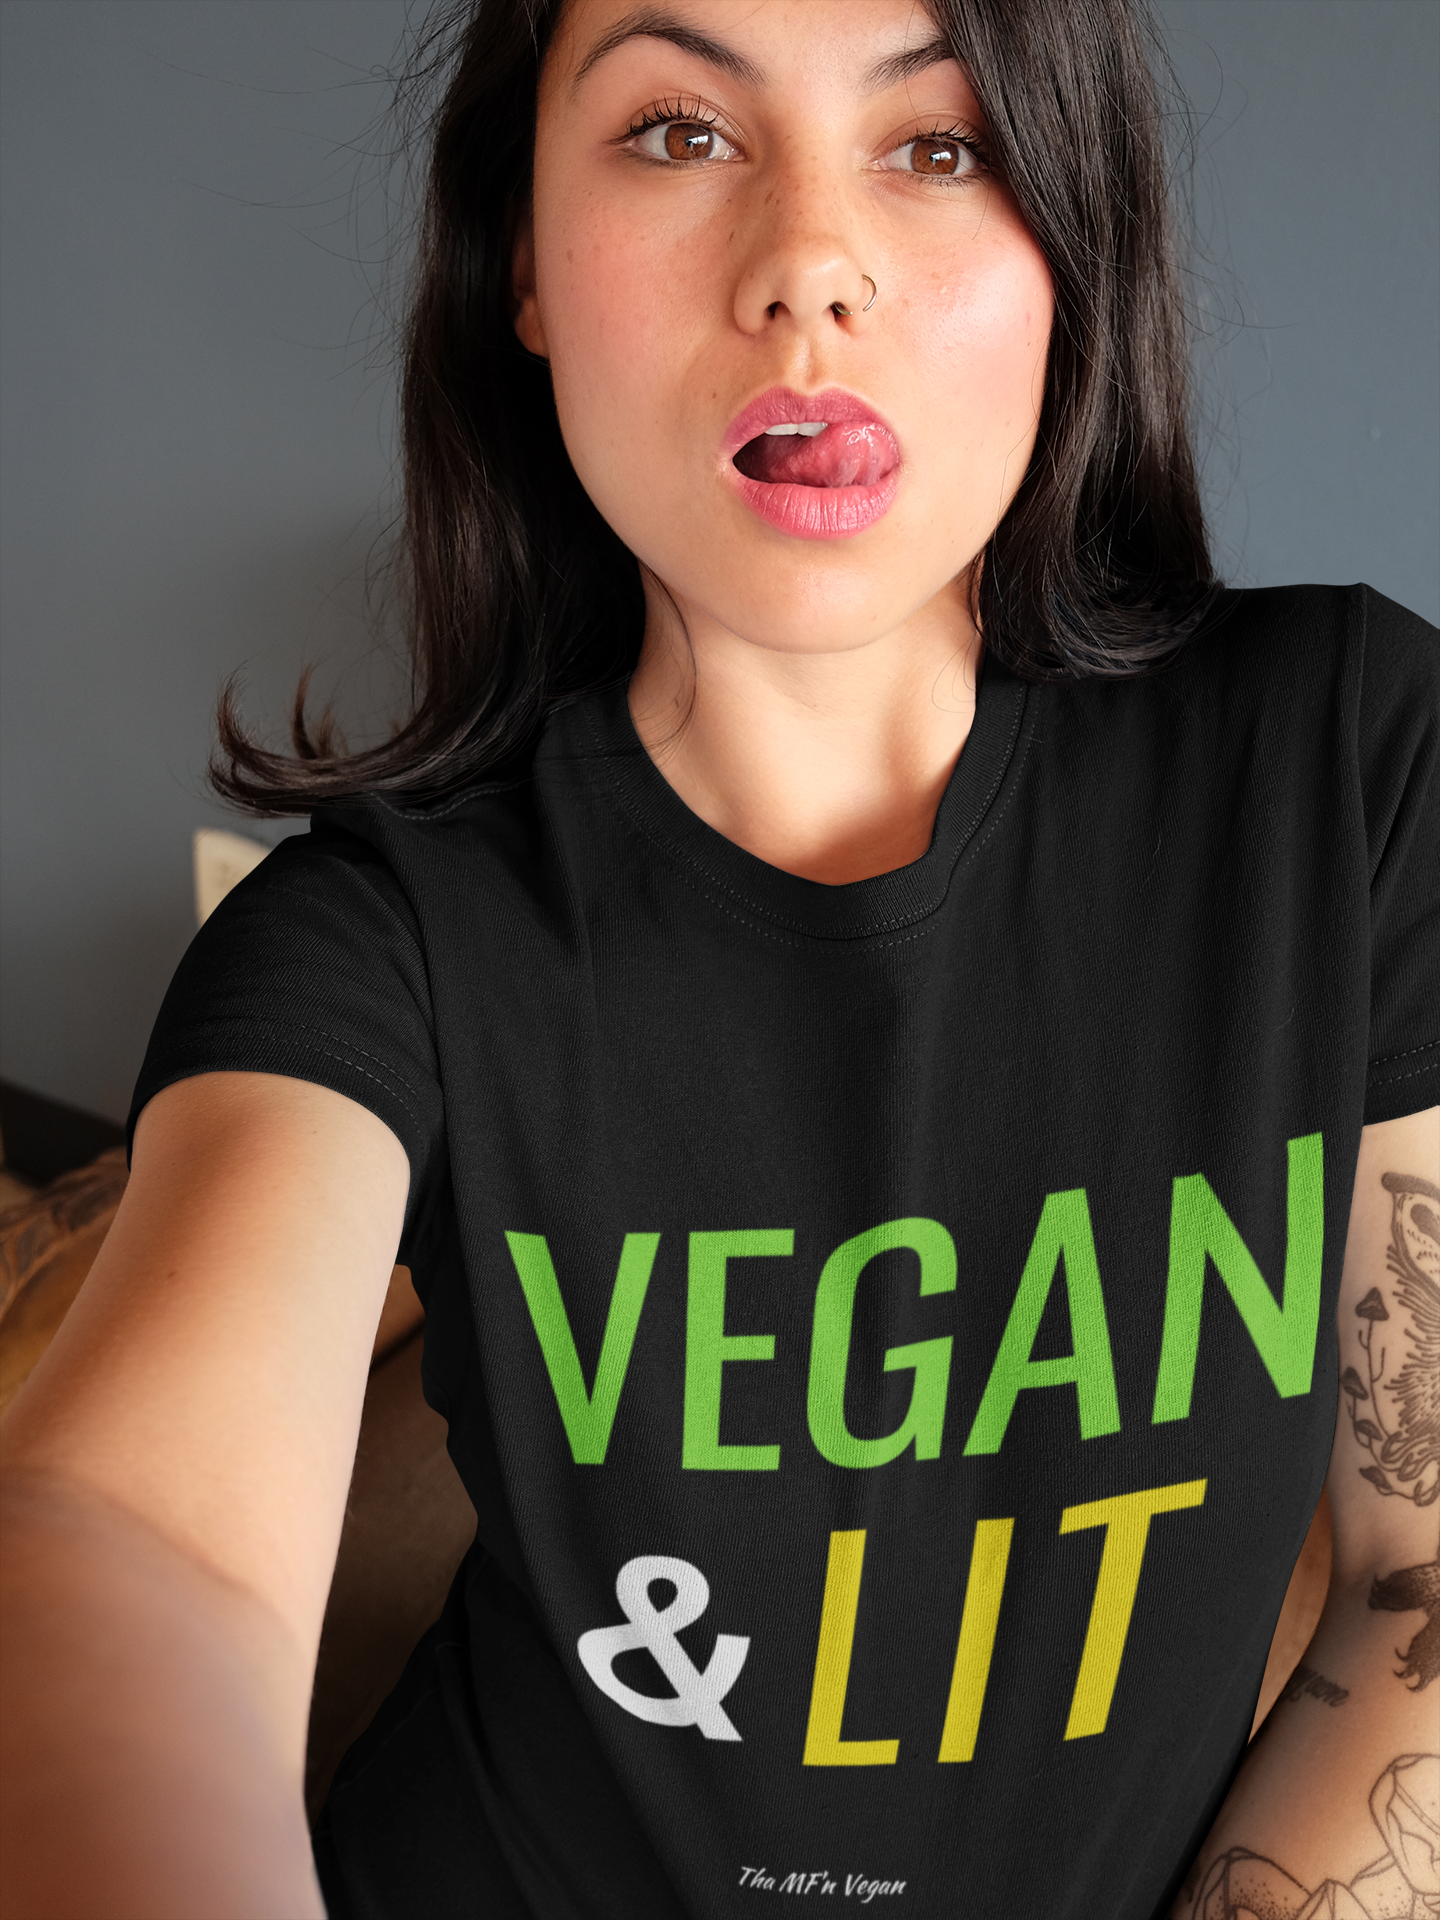 Vegan and Lit - Black Unisex Shirt